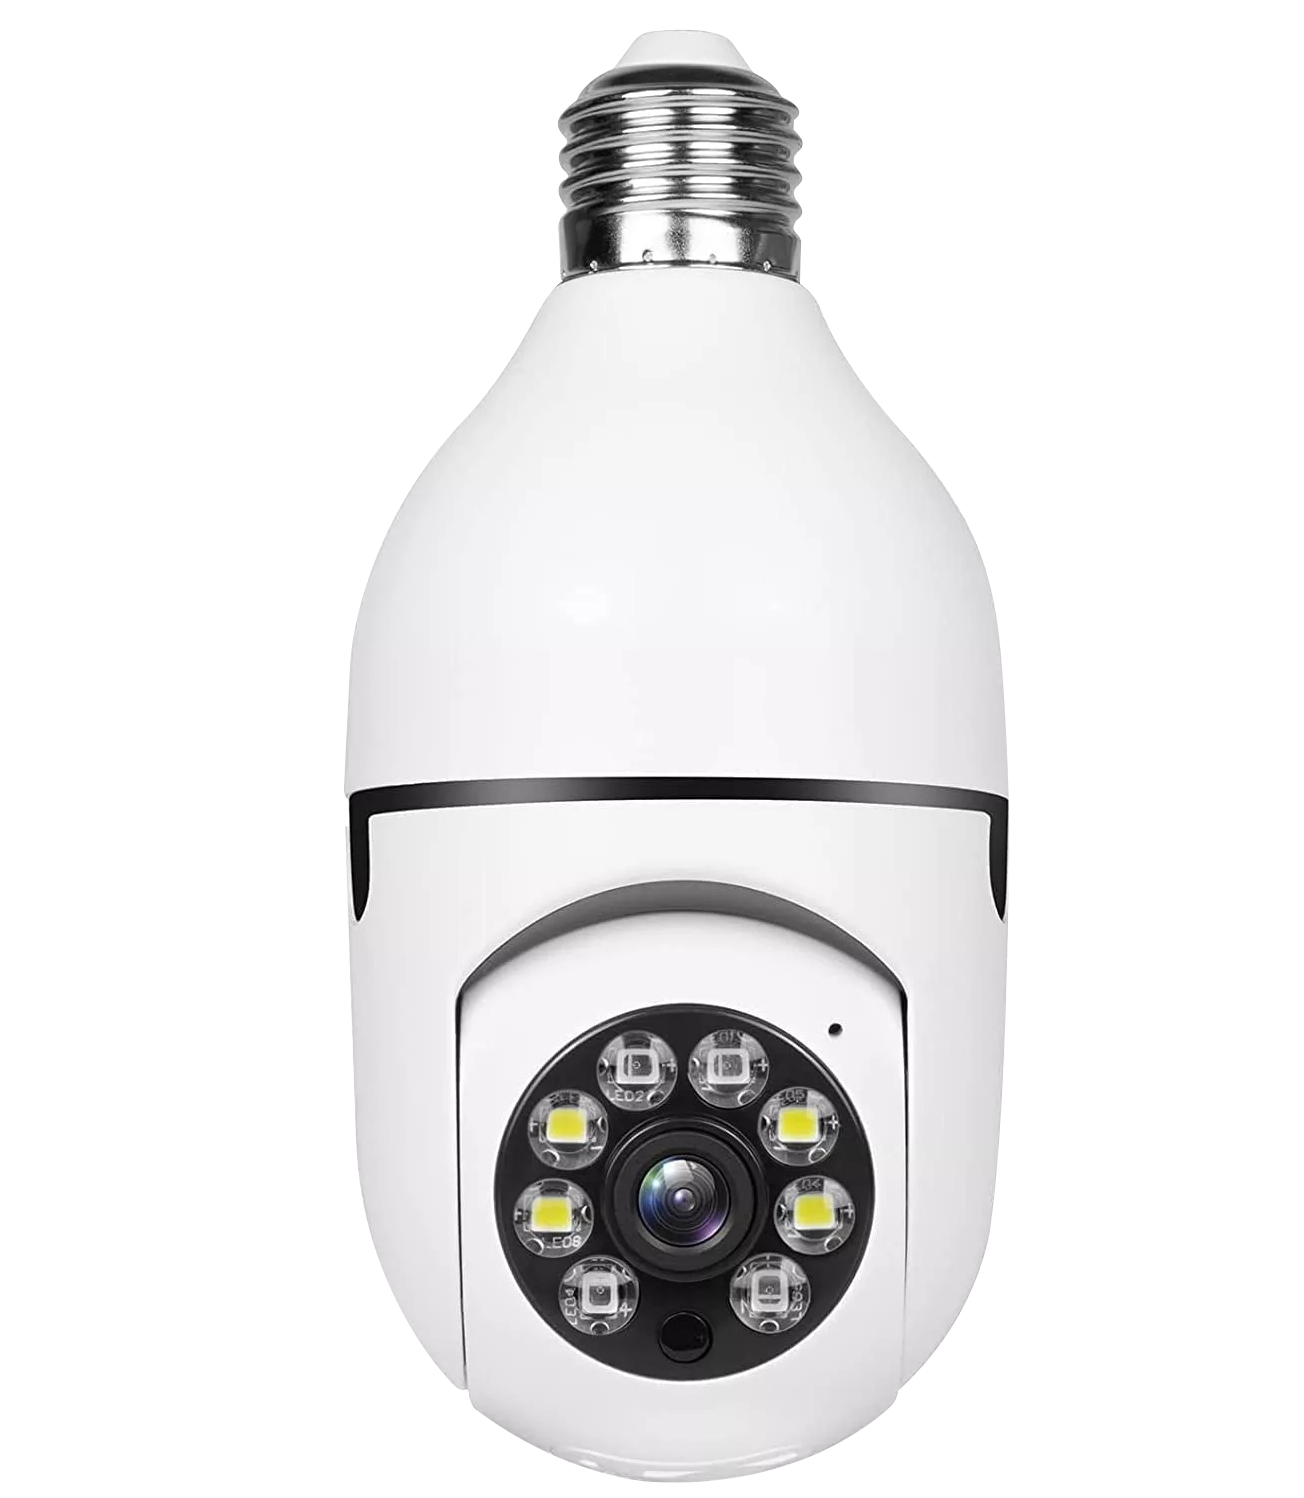 A6 Gloeilamp Camera Draadloos 1080P 360 Graden Panoramisch Smart HD WiFi Cam Night Versie Home Security IP Surveillance CCTV LED Lamp Houder Camera met Doos